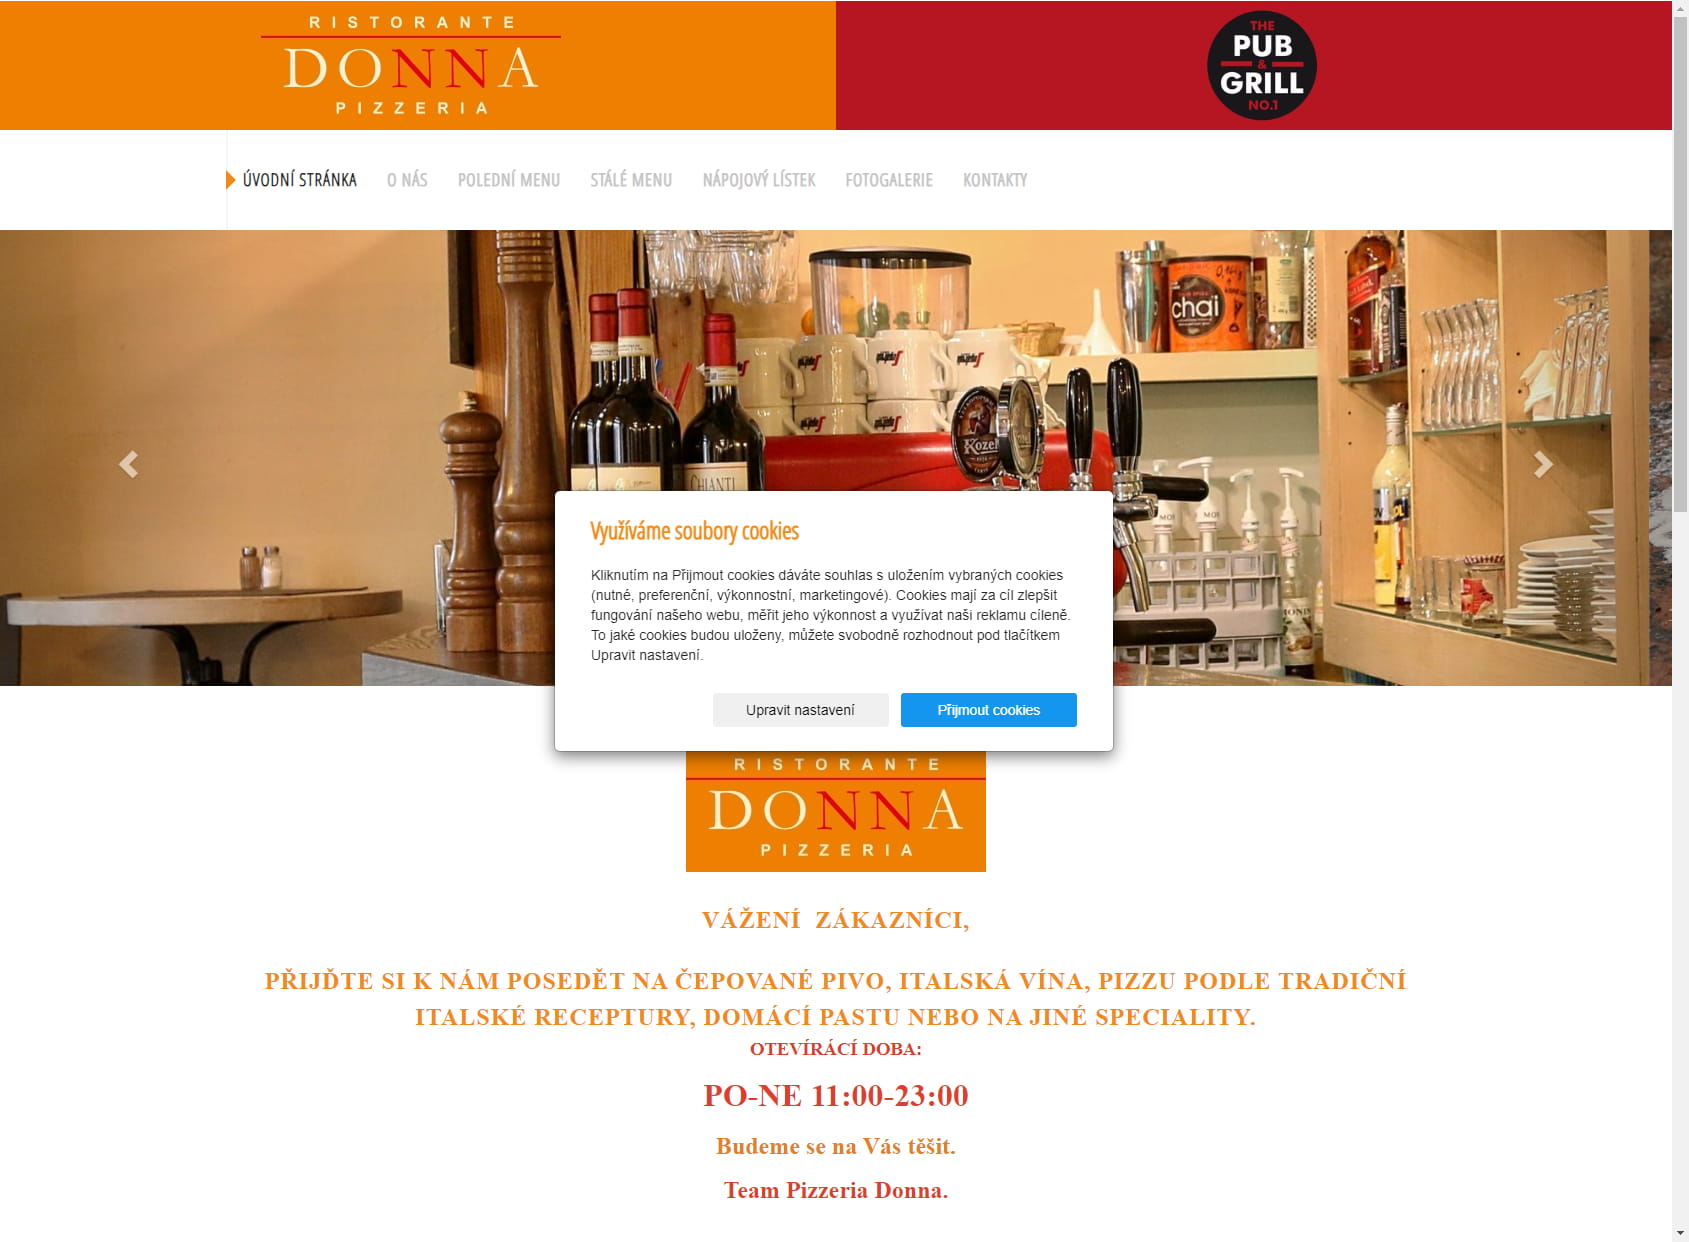 Pizzeria Donna